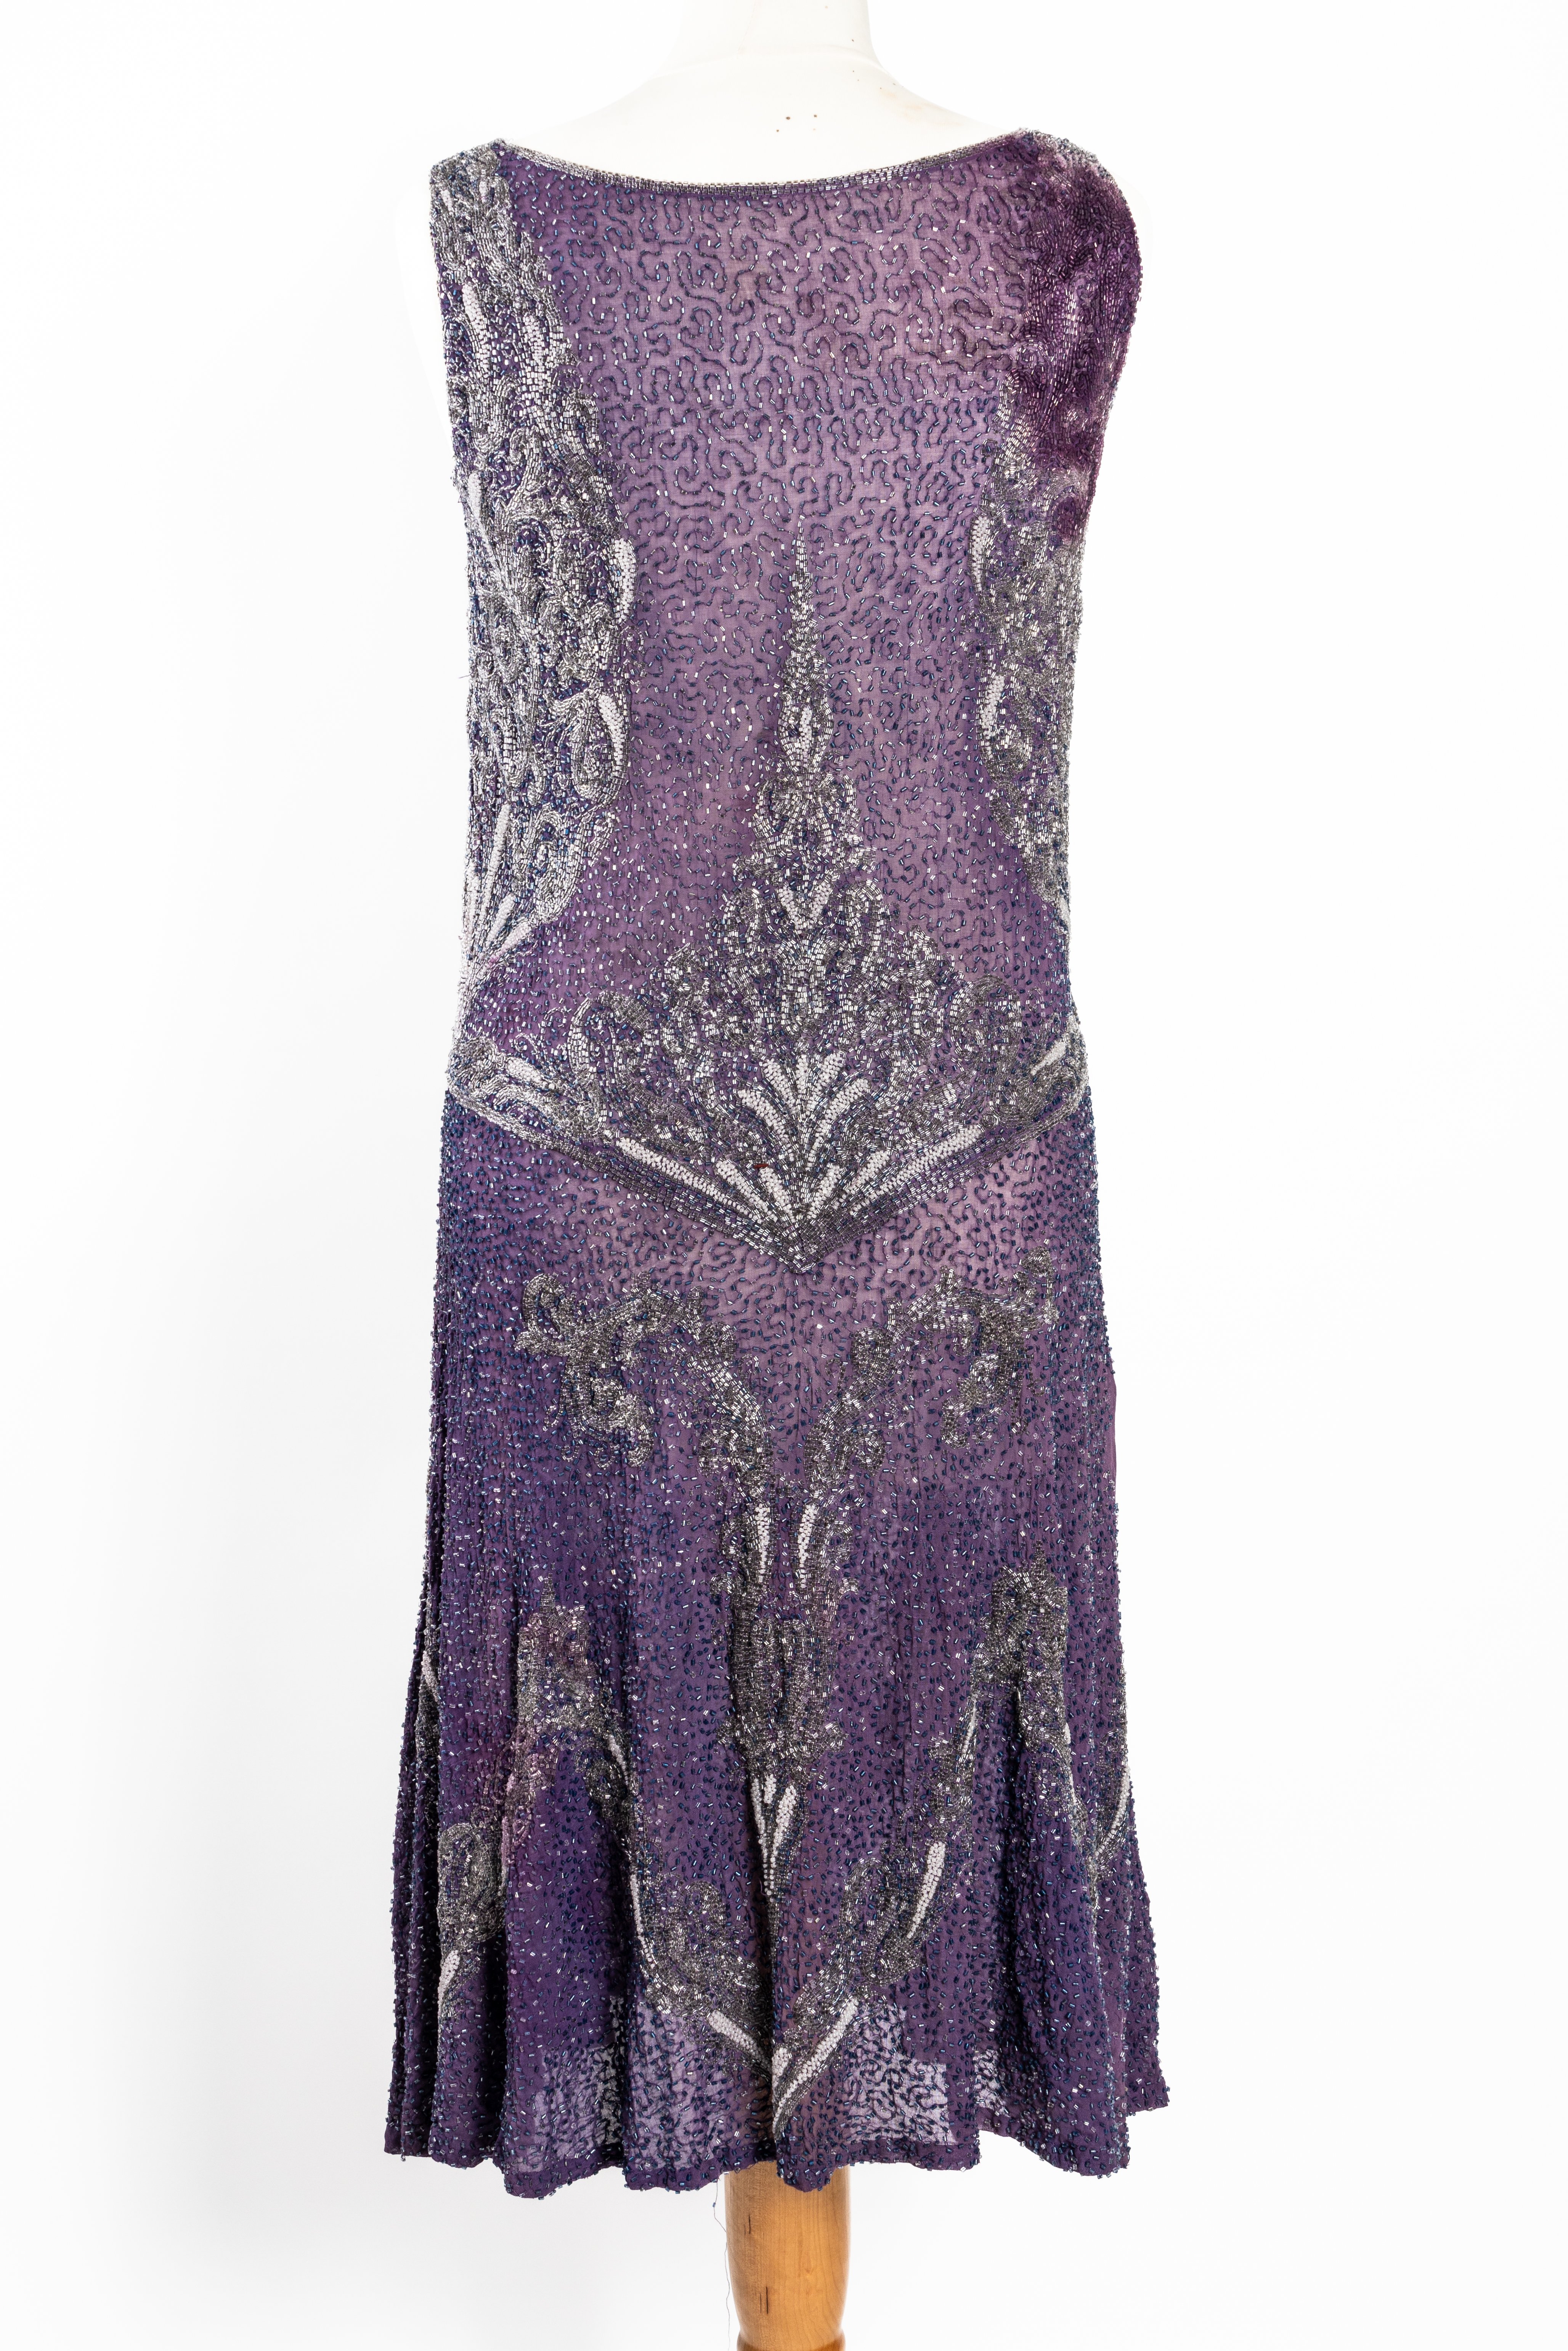 AN ART DECO PURPLE CHIFFON AND BEADED FLAPPER DRESS - Image 7 of 14